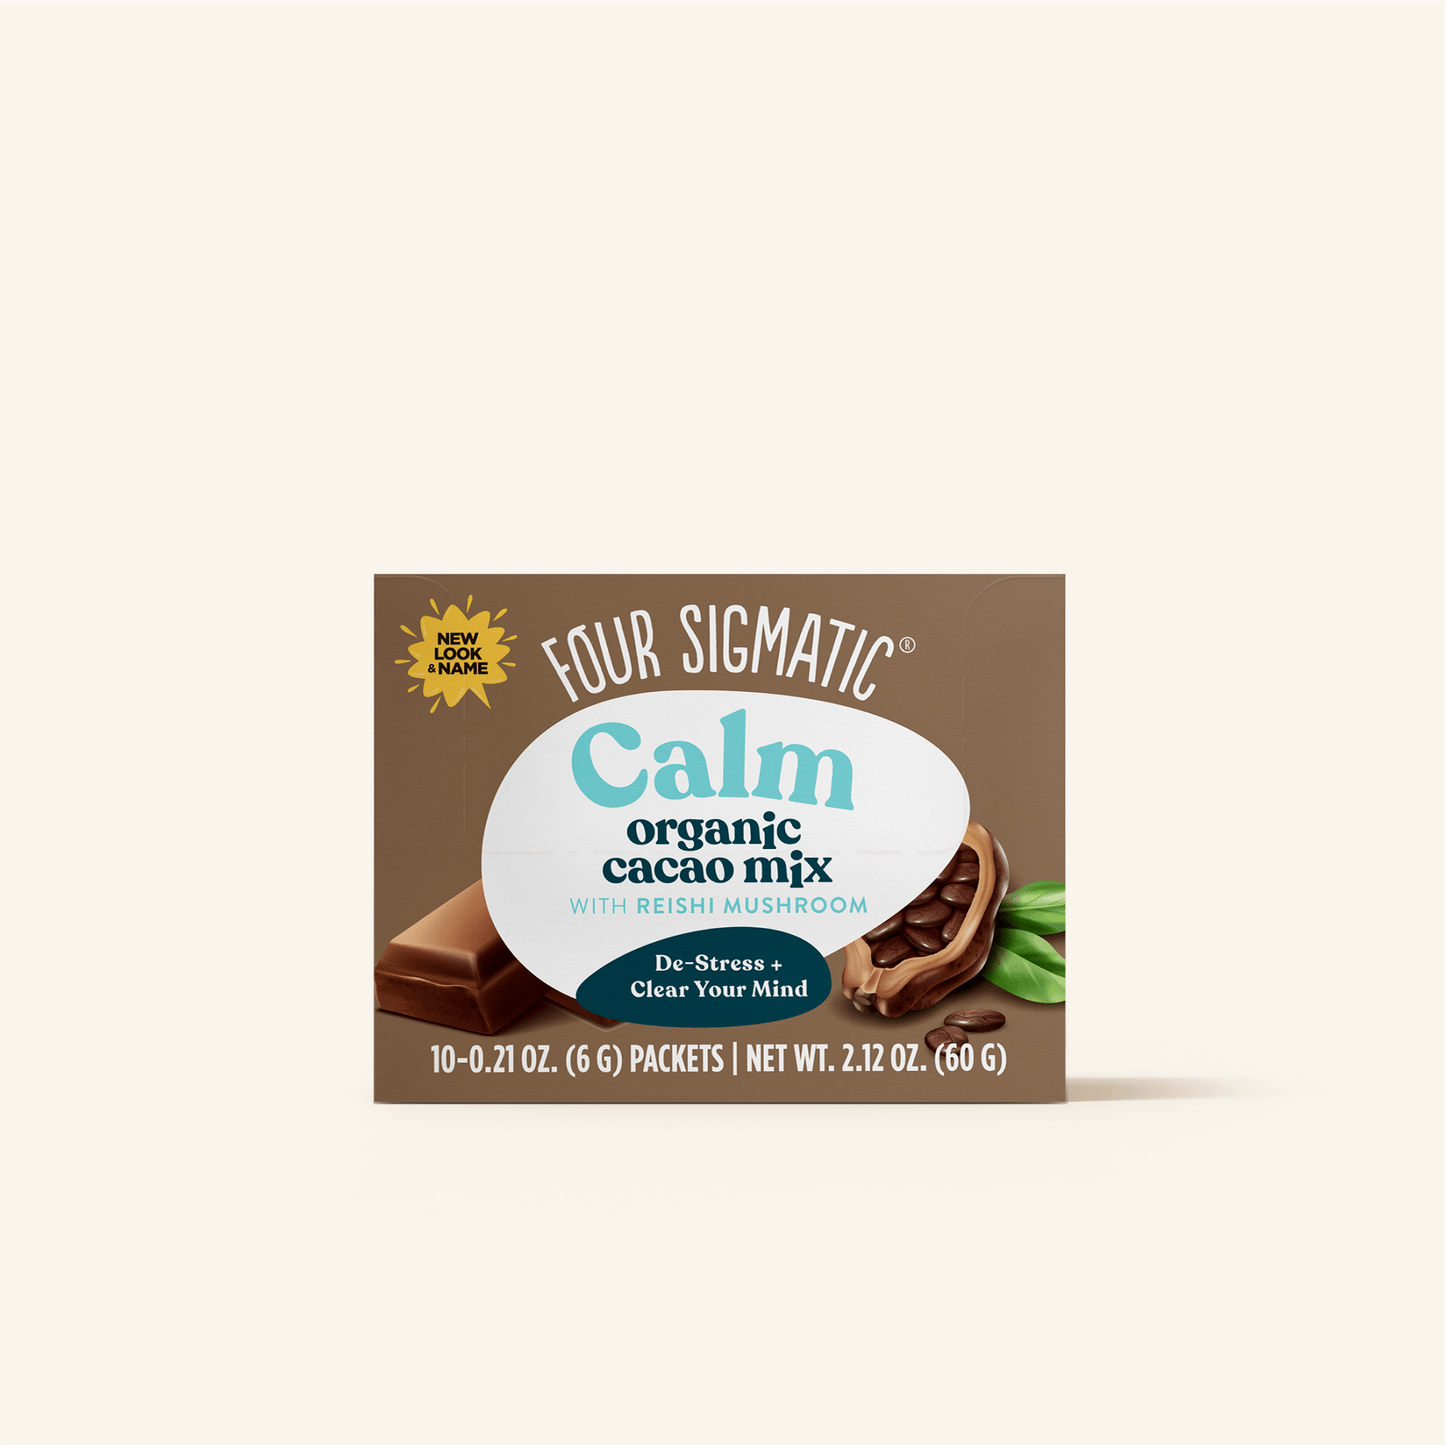 Calm Cacao Box 1-Pack